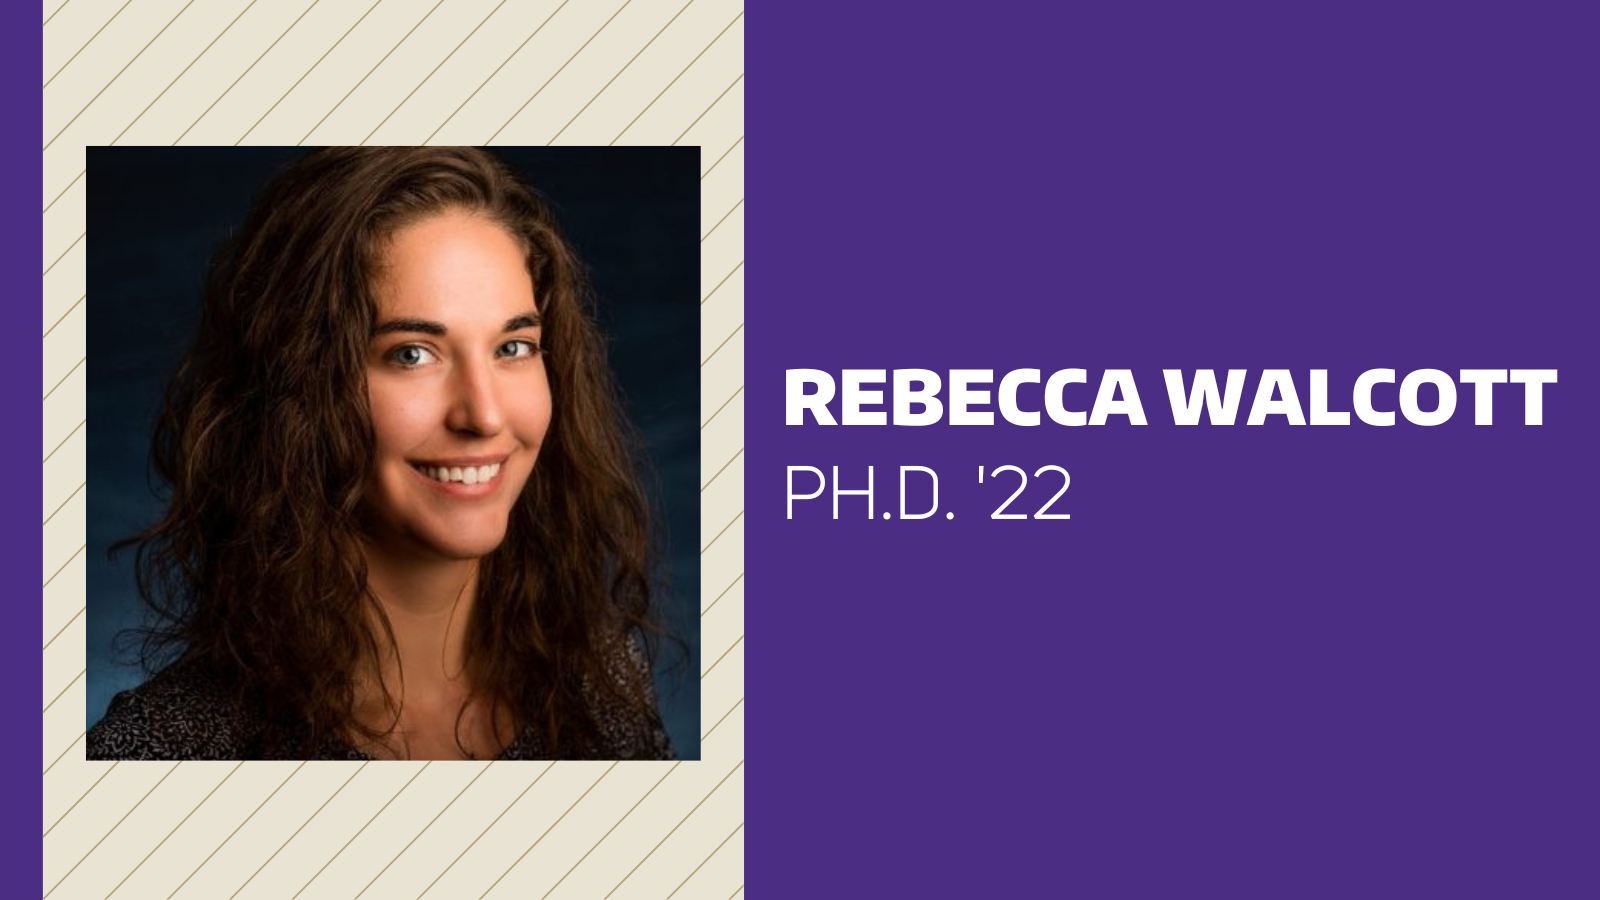 Rebecca Walcott Ph.D. '22